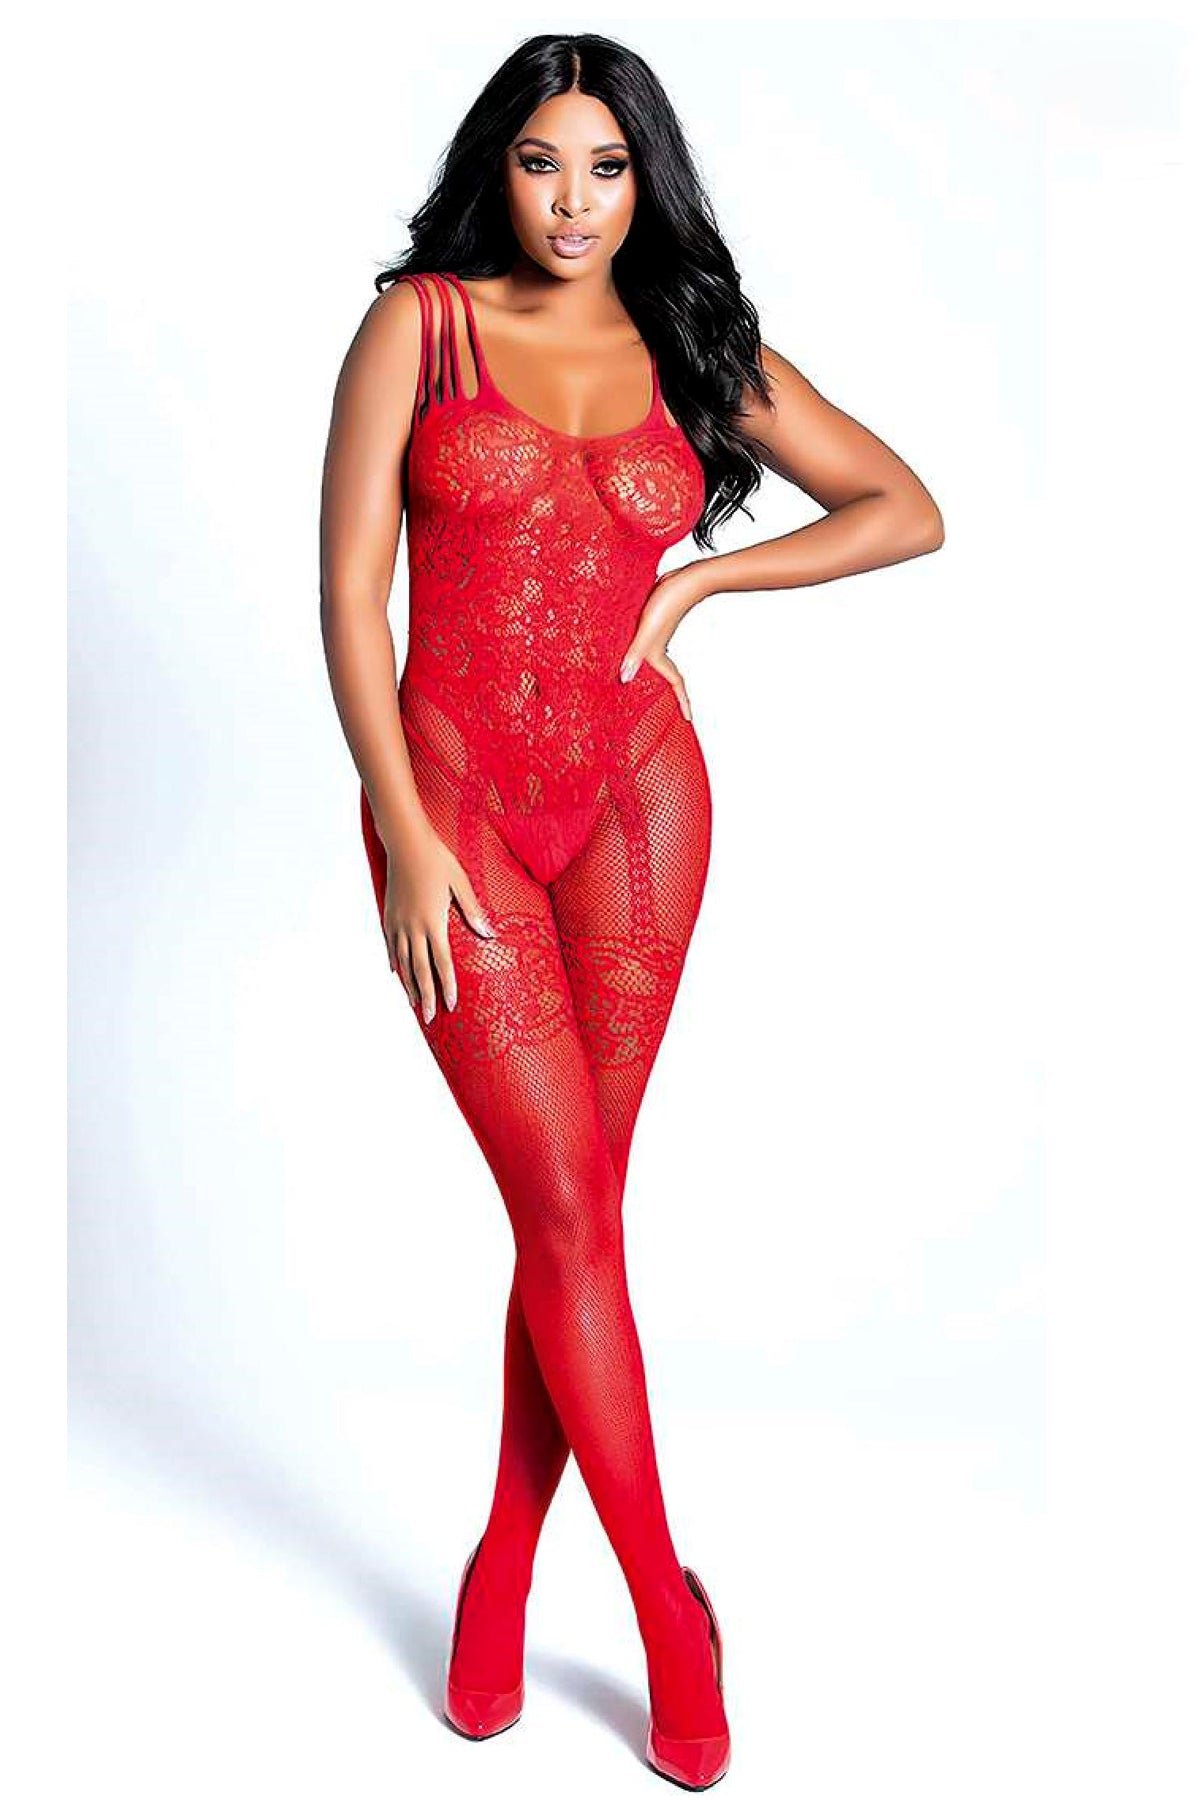 Women Babydoll Fancy Outfit Body Stockings D30023 Red